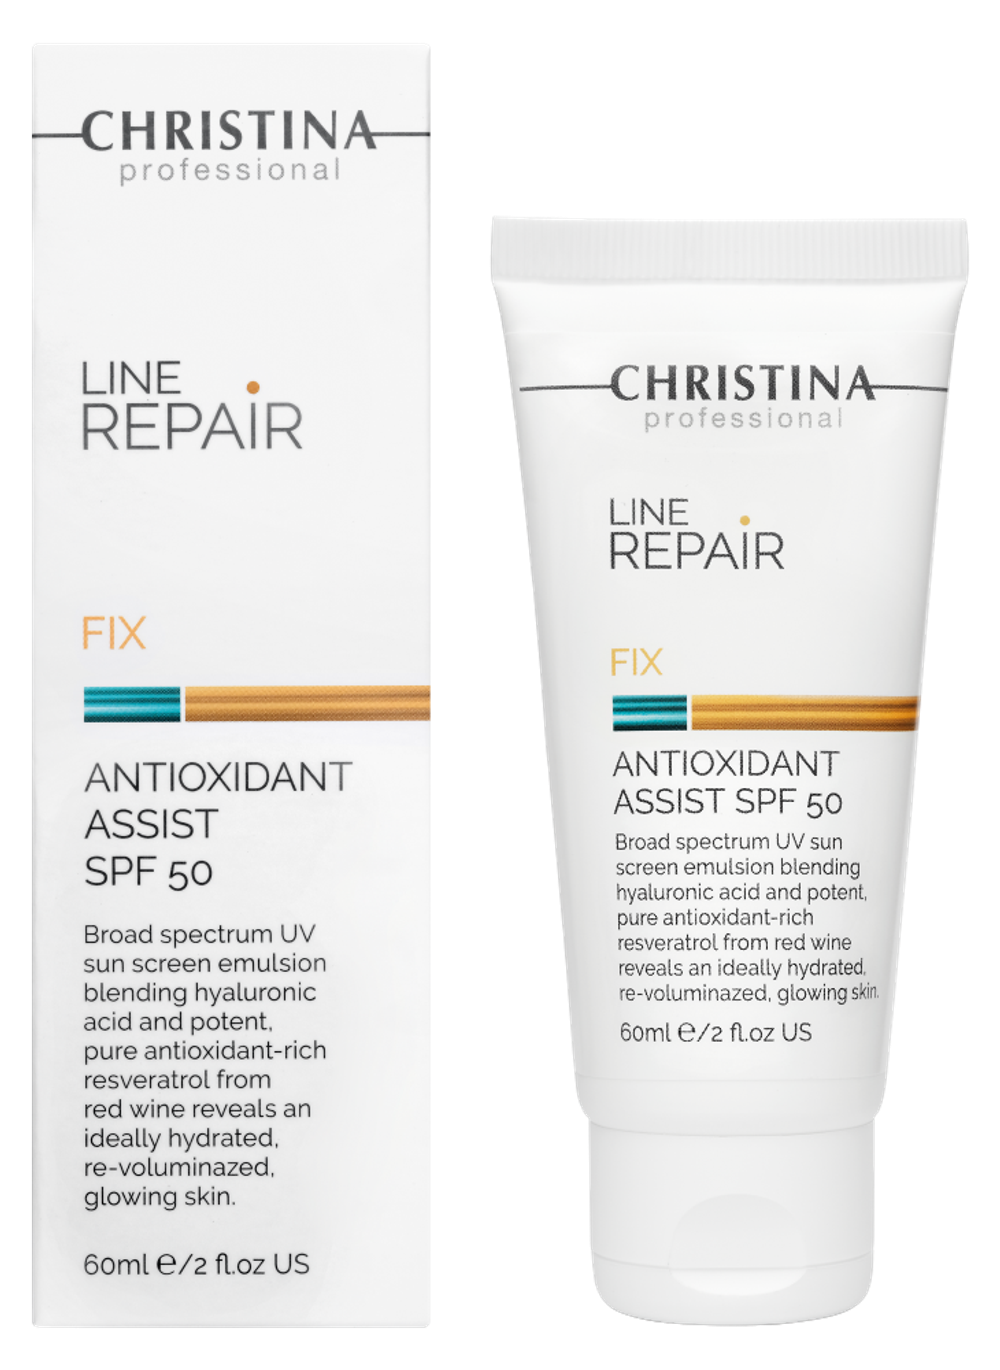 CHRISTINA Line Repair Fix Antioxidant Assist SPF 50